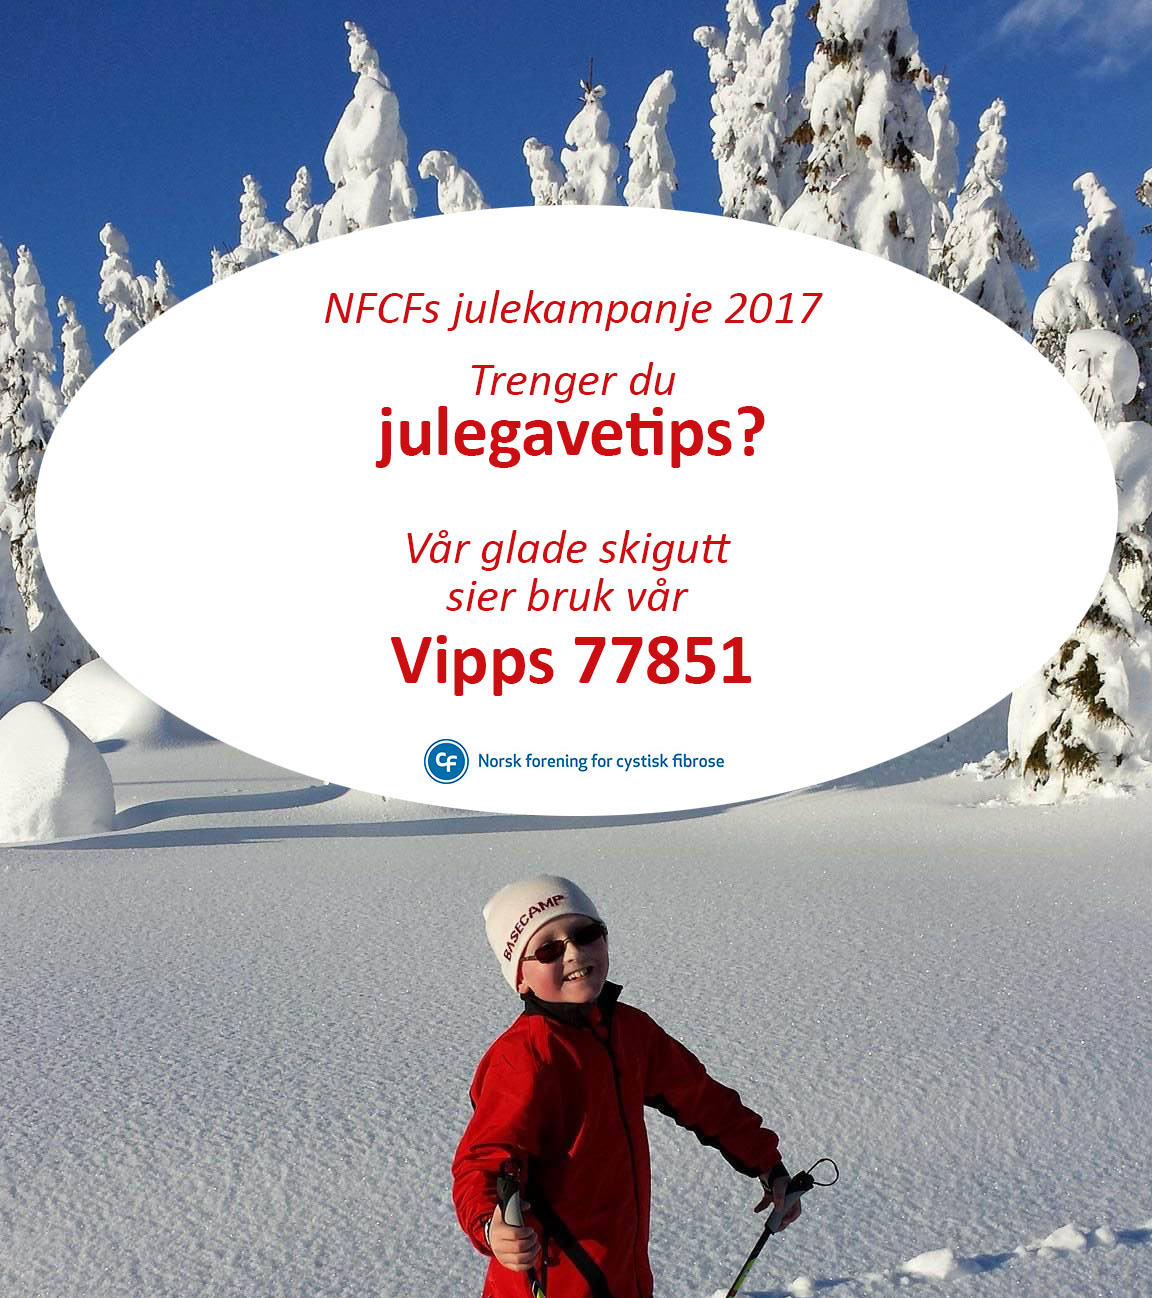 NFCFJulevippskamapnje2017 julegutt